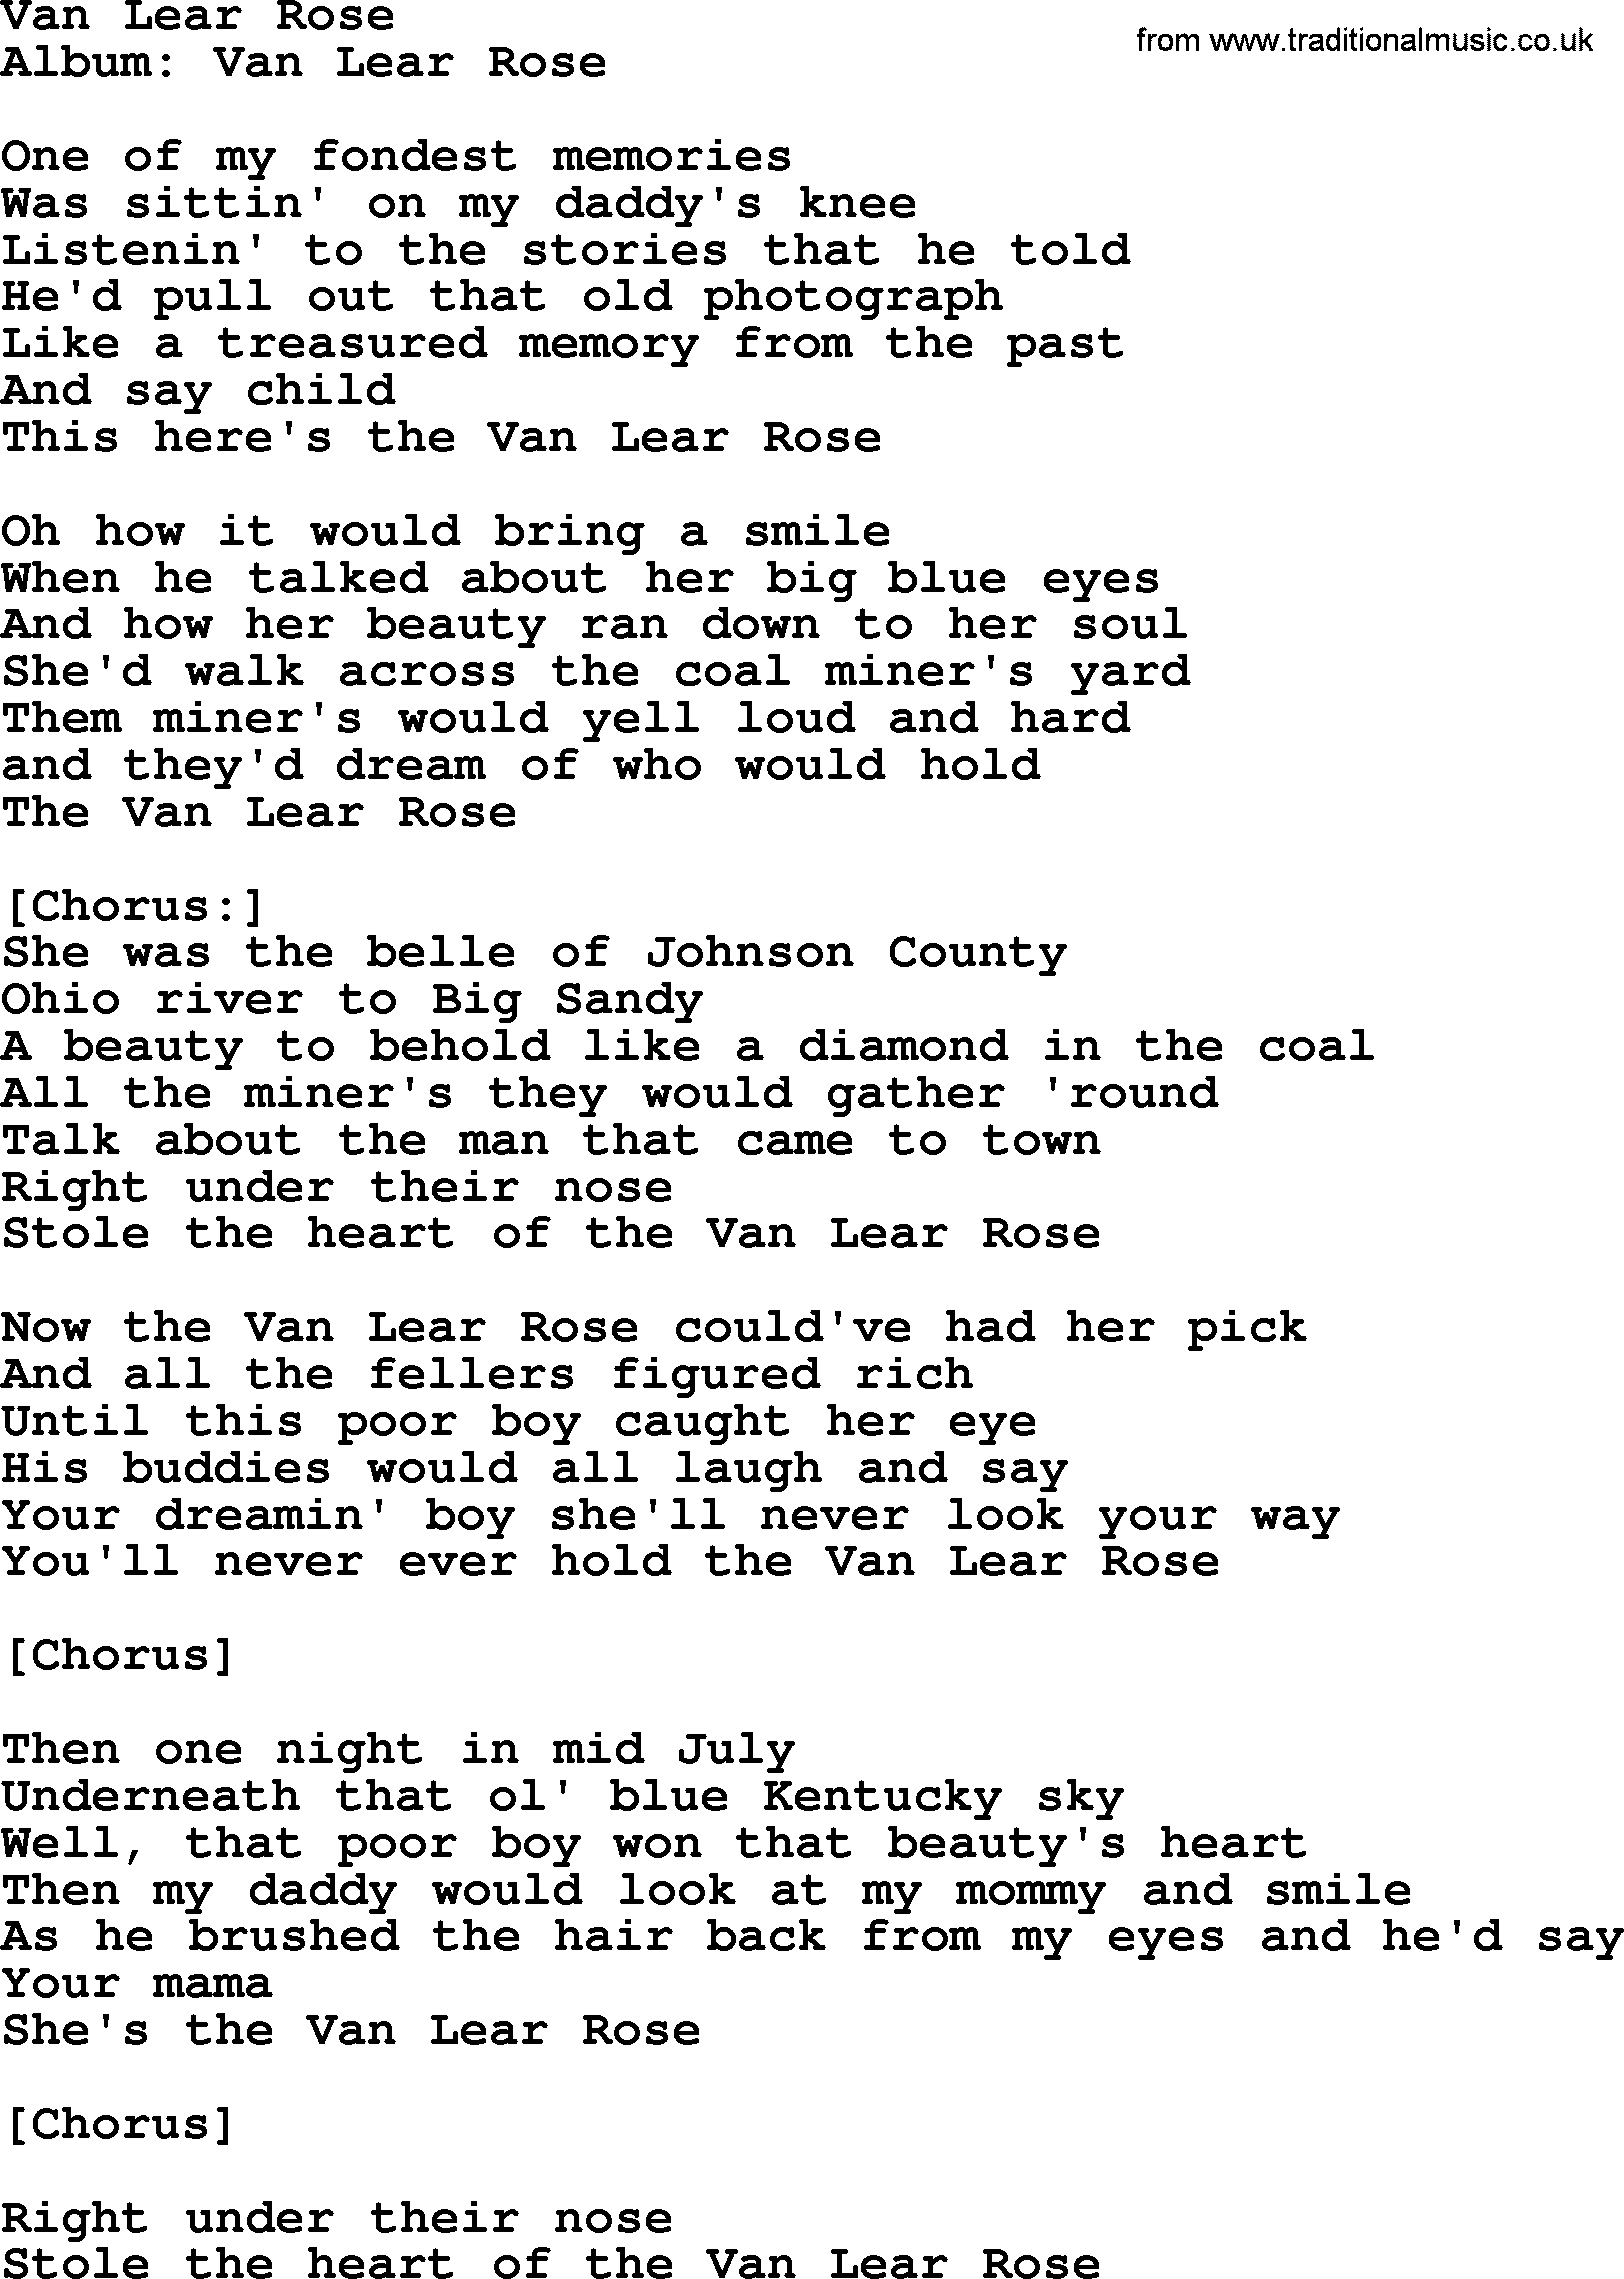 Loretta Lynn song: Van Lear Rose lyrics